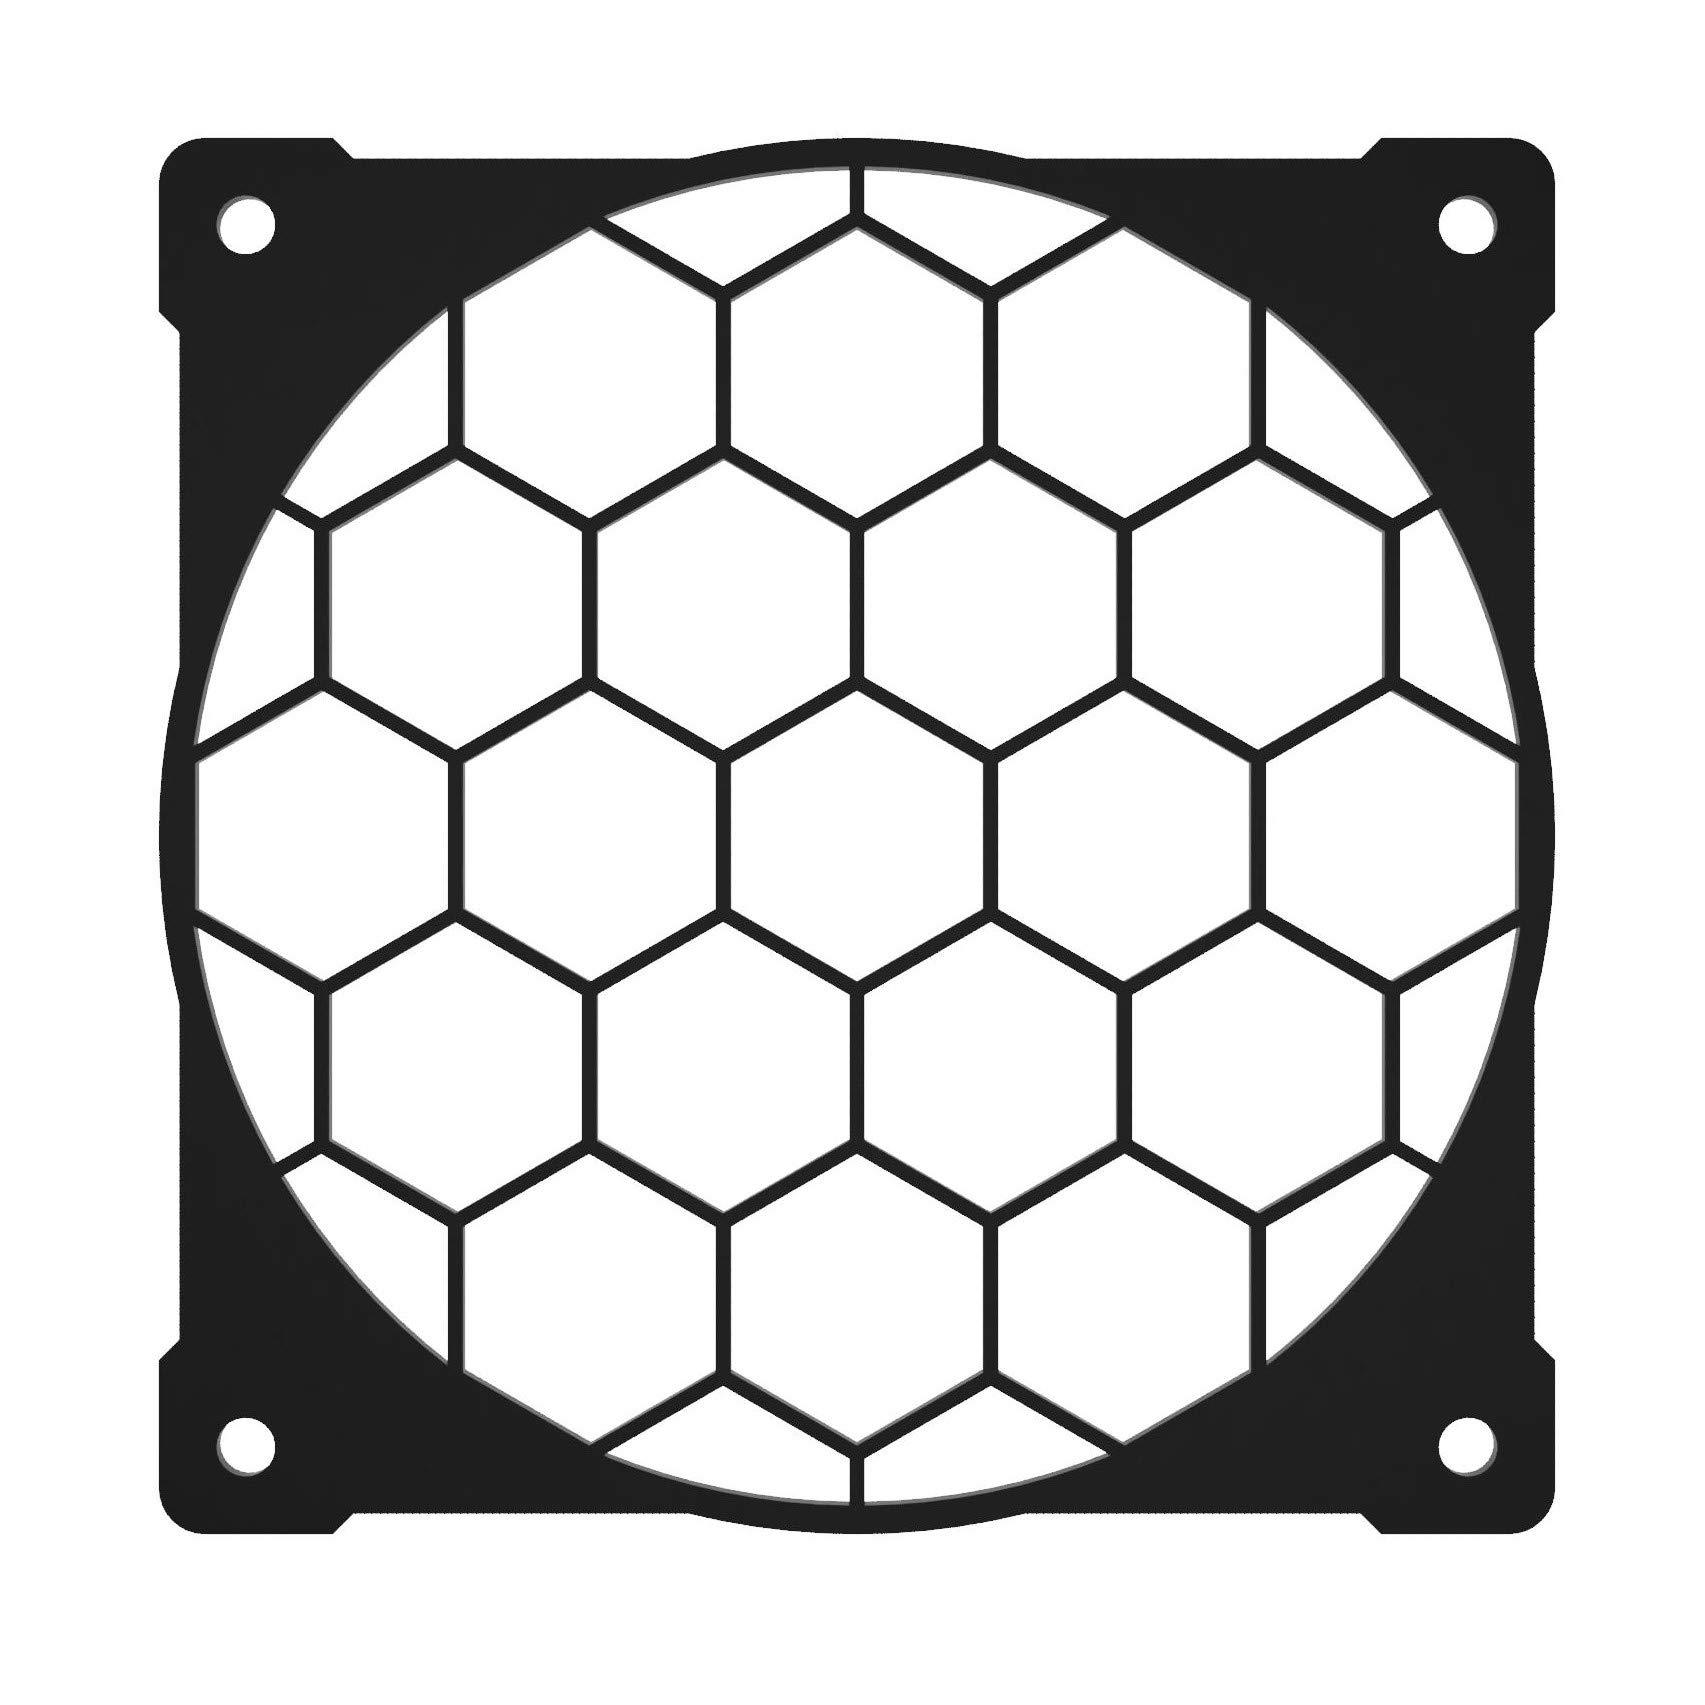 Savant PCs 120mm computer case fan cover with unique hexagon design - great for rgb argb led lighting